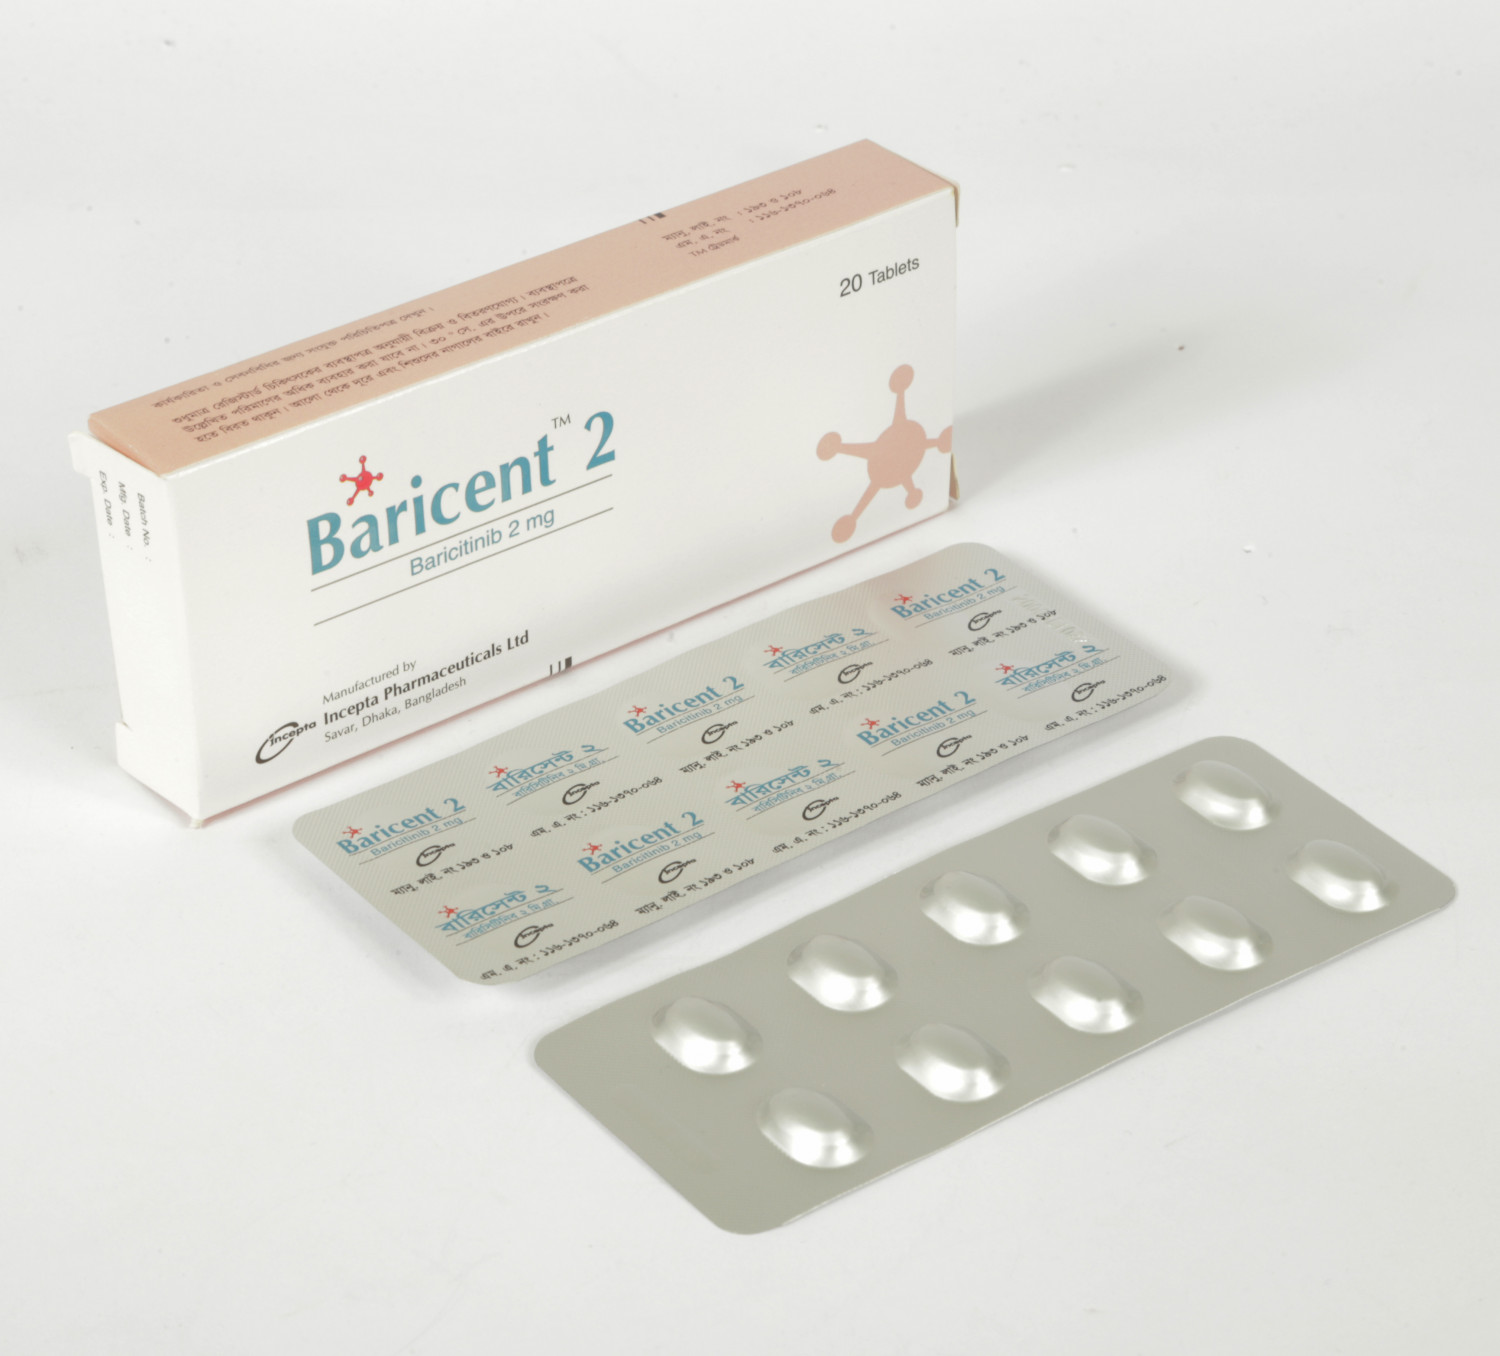 Baricent 2 (10 pic)